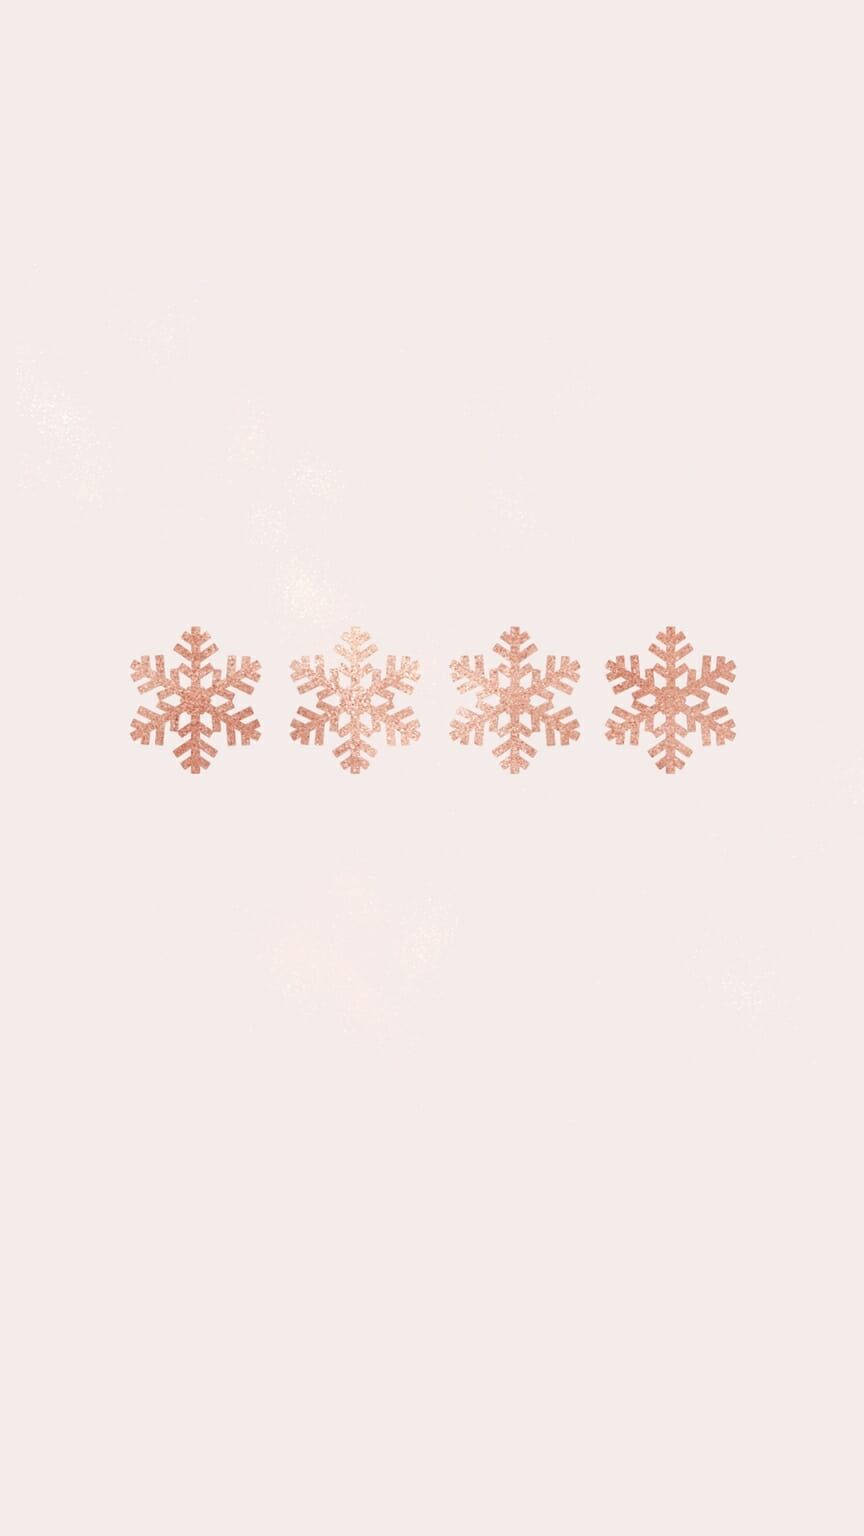 Minimalist Snowflakes Christmas Phone Wallpaper